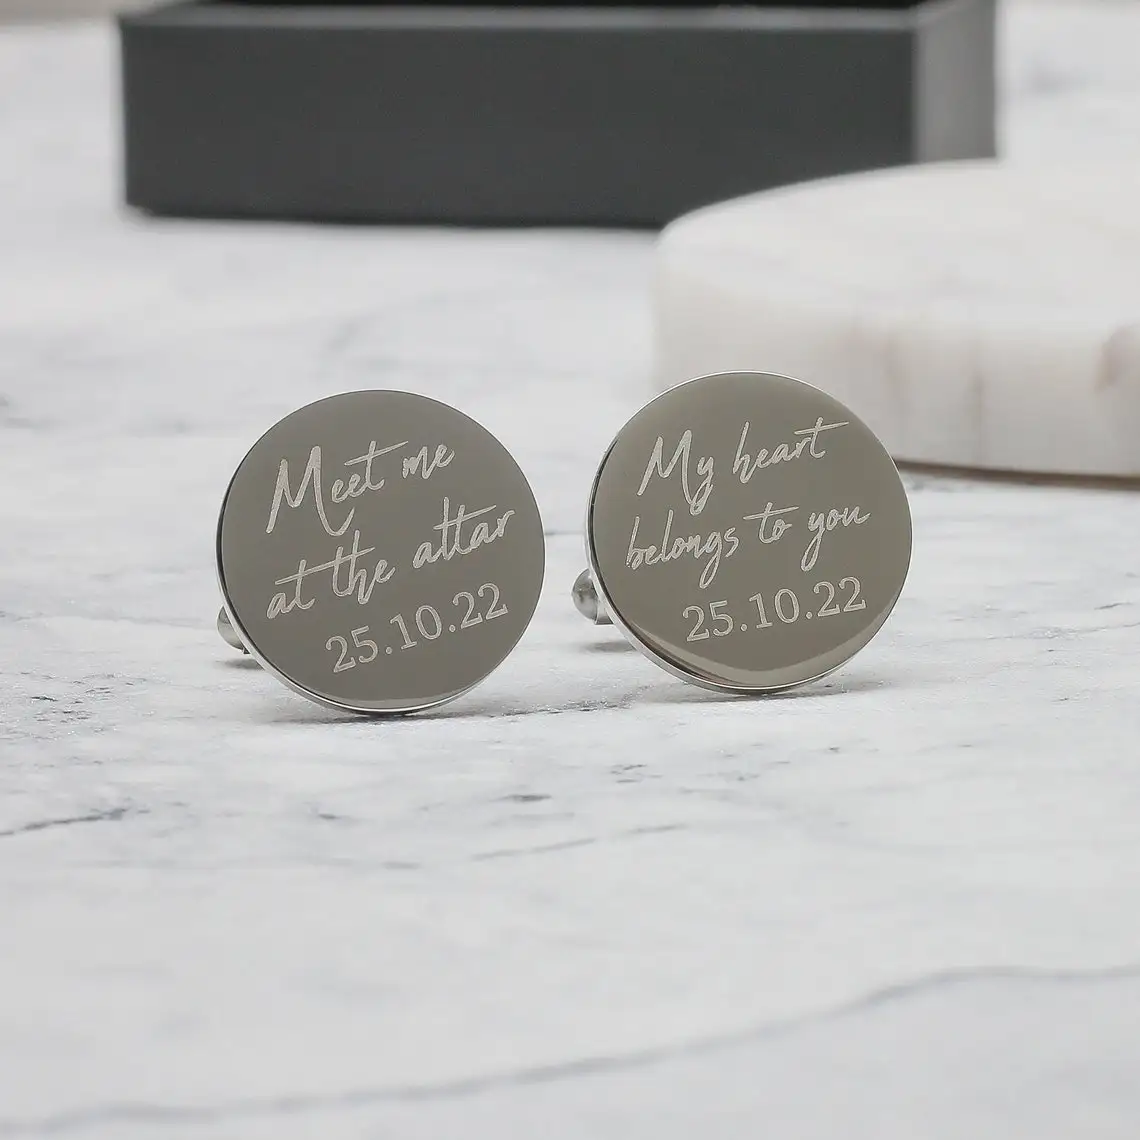 Engrave Initial Cufflinks for Wedding Birthday Groomsmen Gift Stainless Steel Cufflinks for Best Man Dad Husbands Gifts